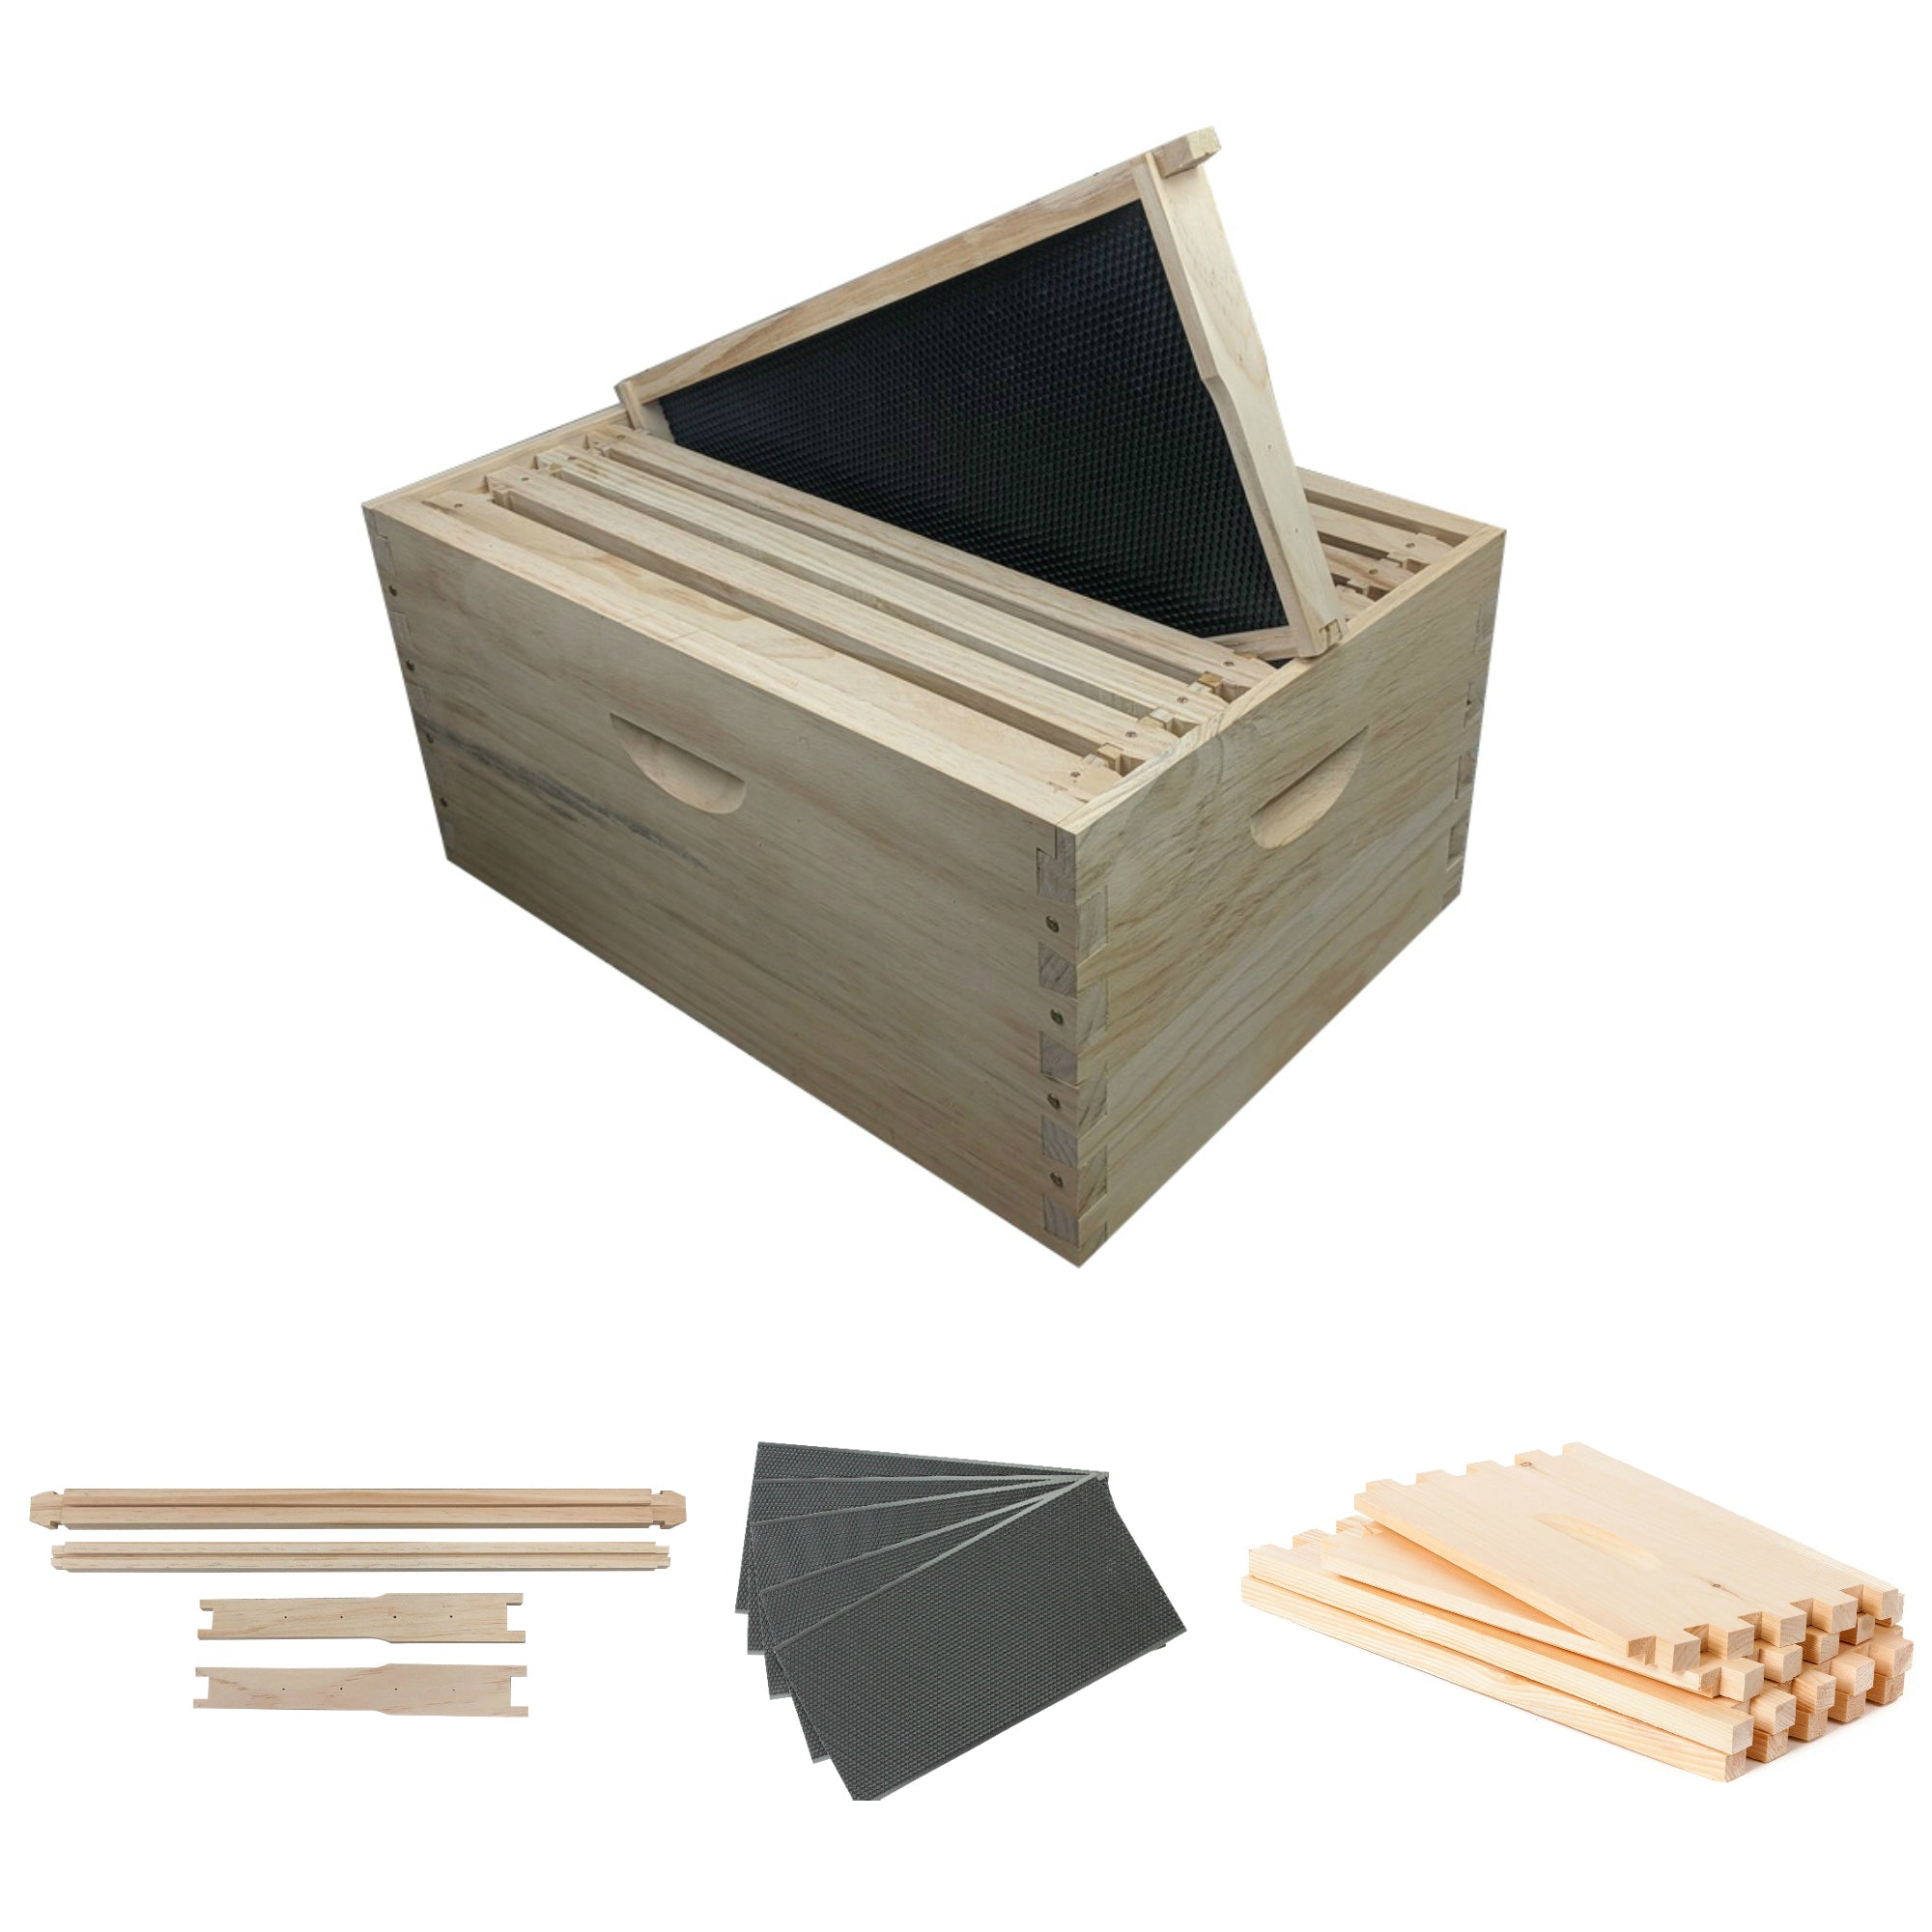 8 Frame Full Depth Beehive Super/Box Kit Including Frames and Foundation